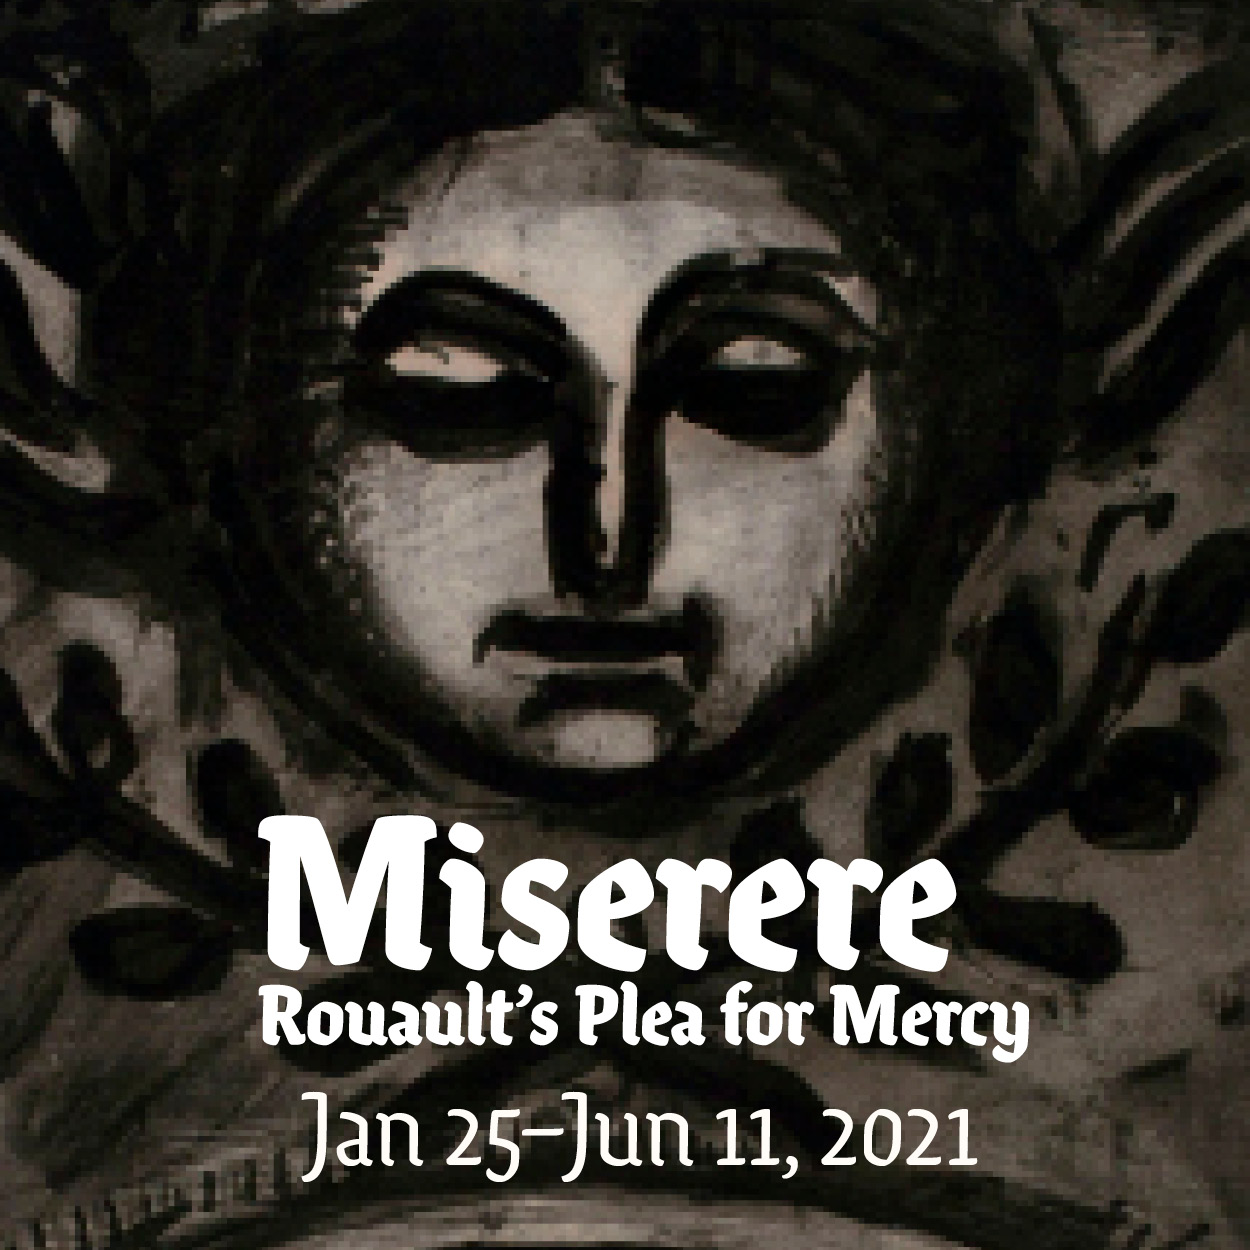 Miserere: Rouault's Plea for Mercy January 25-June 11, 2021